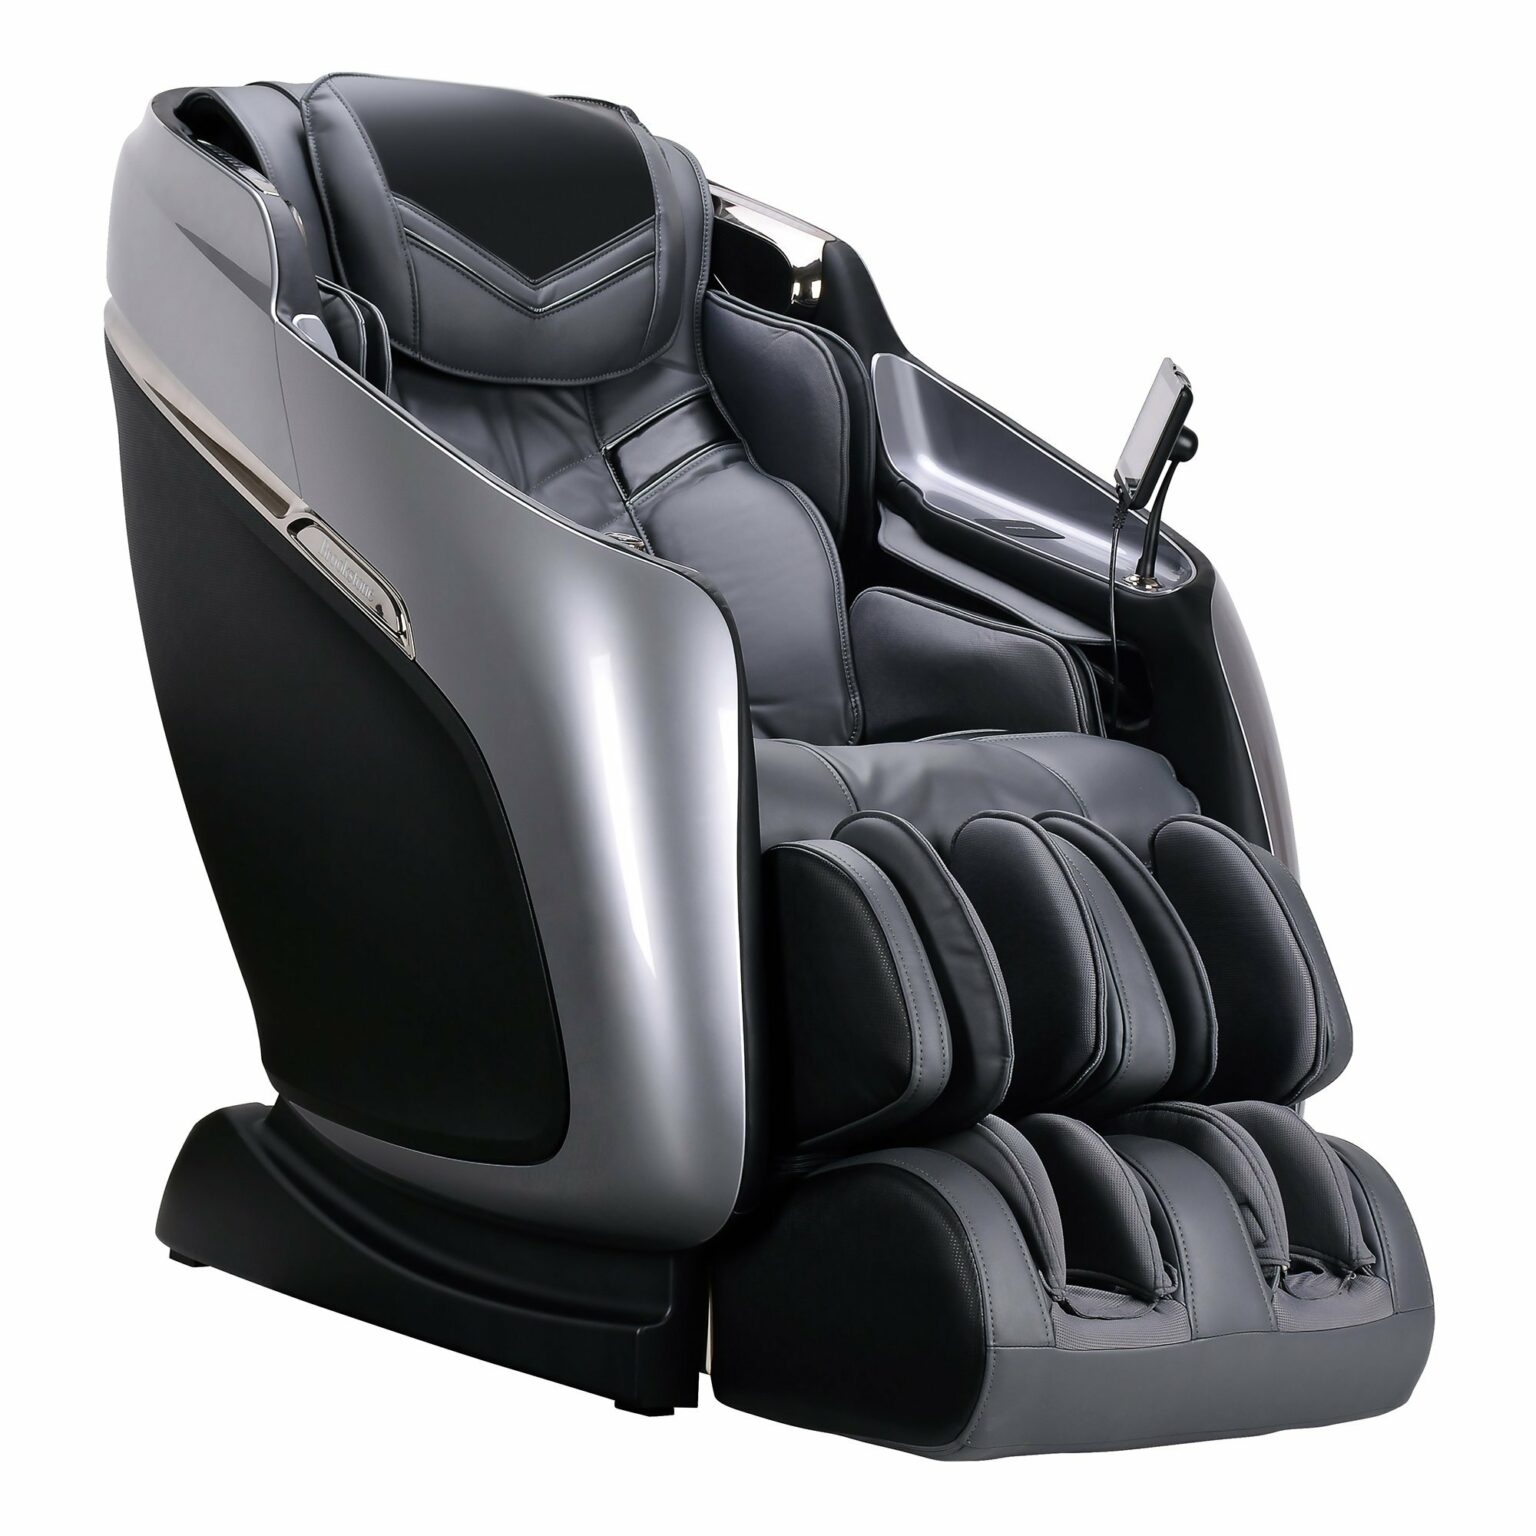 Brookstone Mach Ix Massage Chair Review